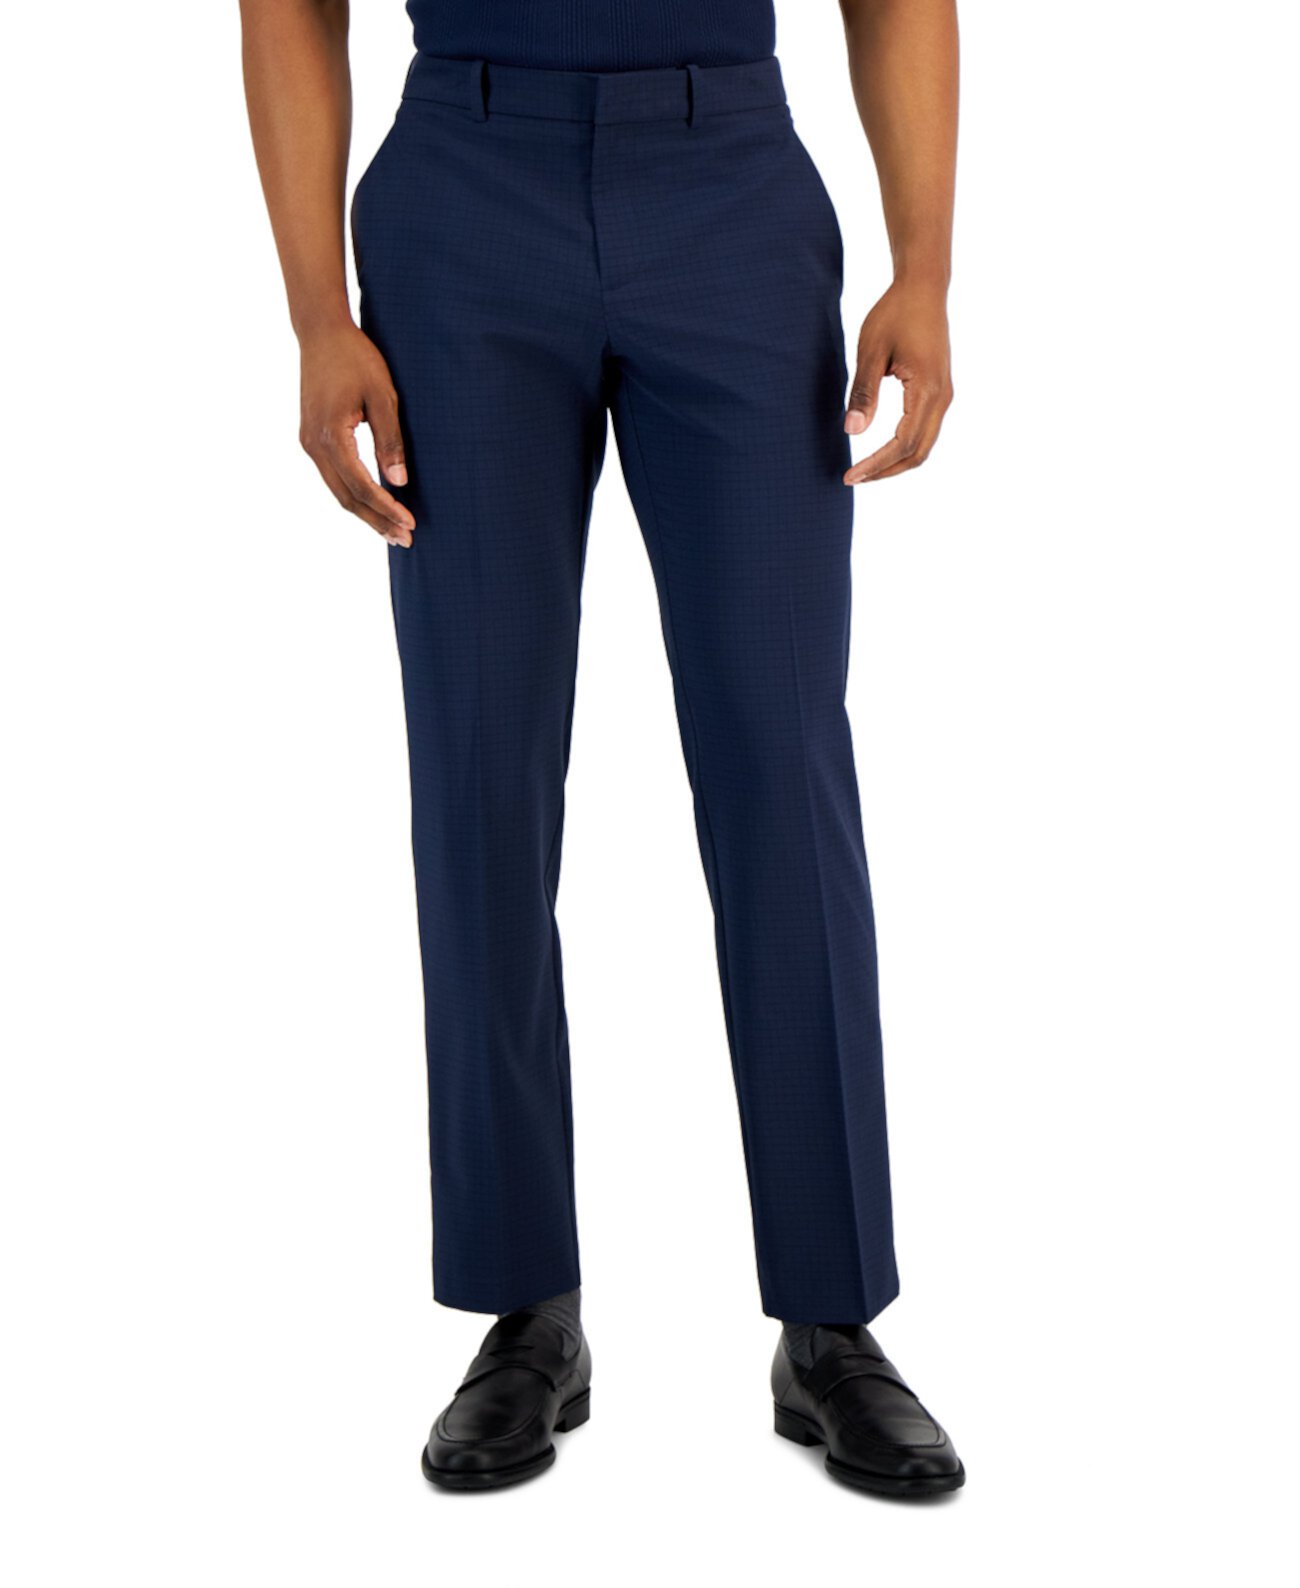 Мужские классические брюки Modern-Fit Stretch Resolution Perry Ellis